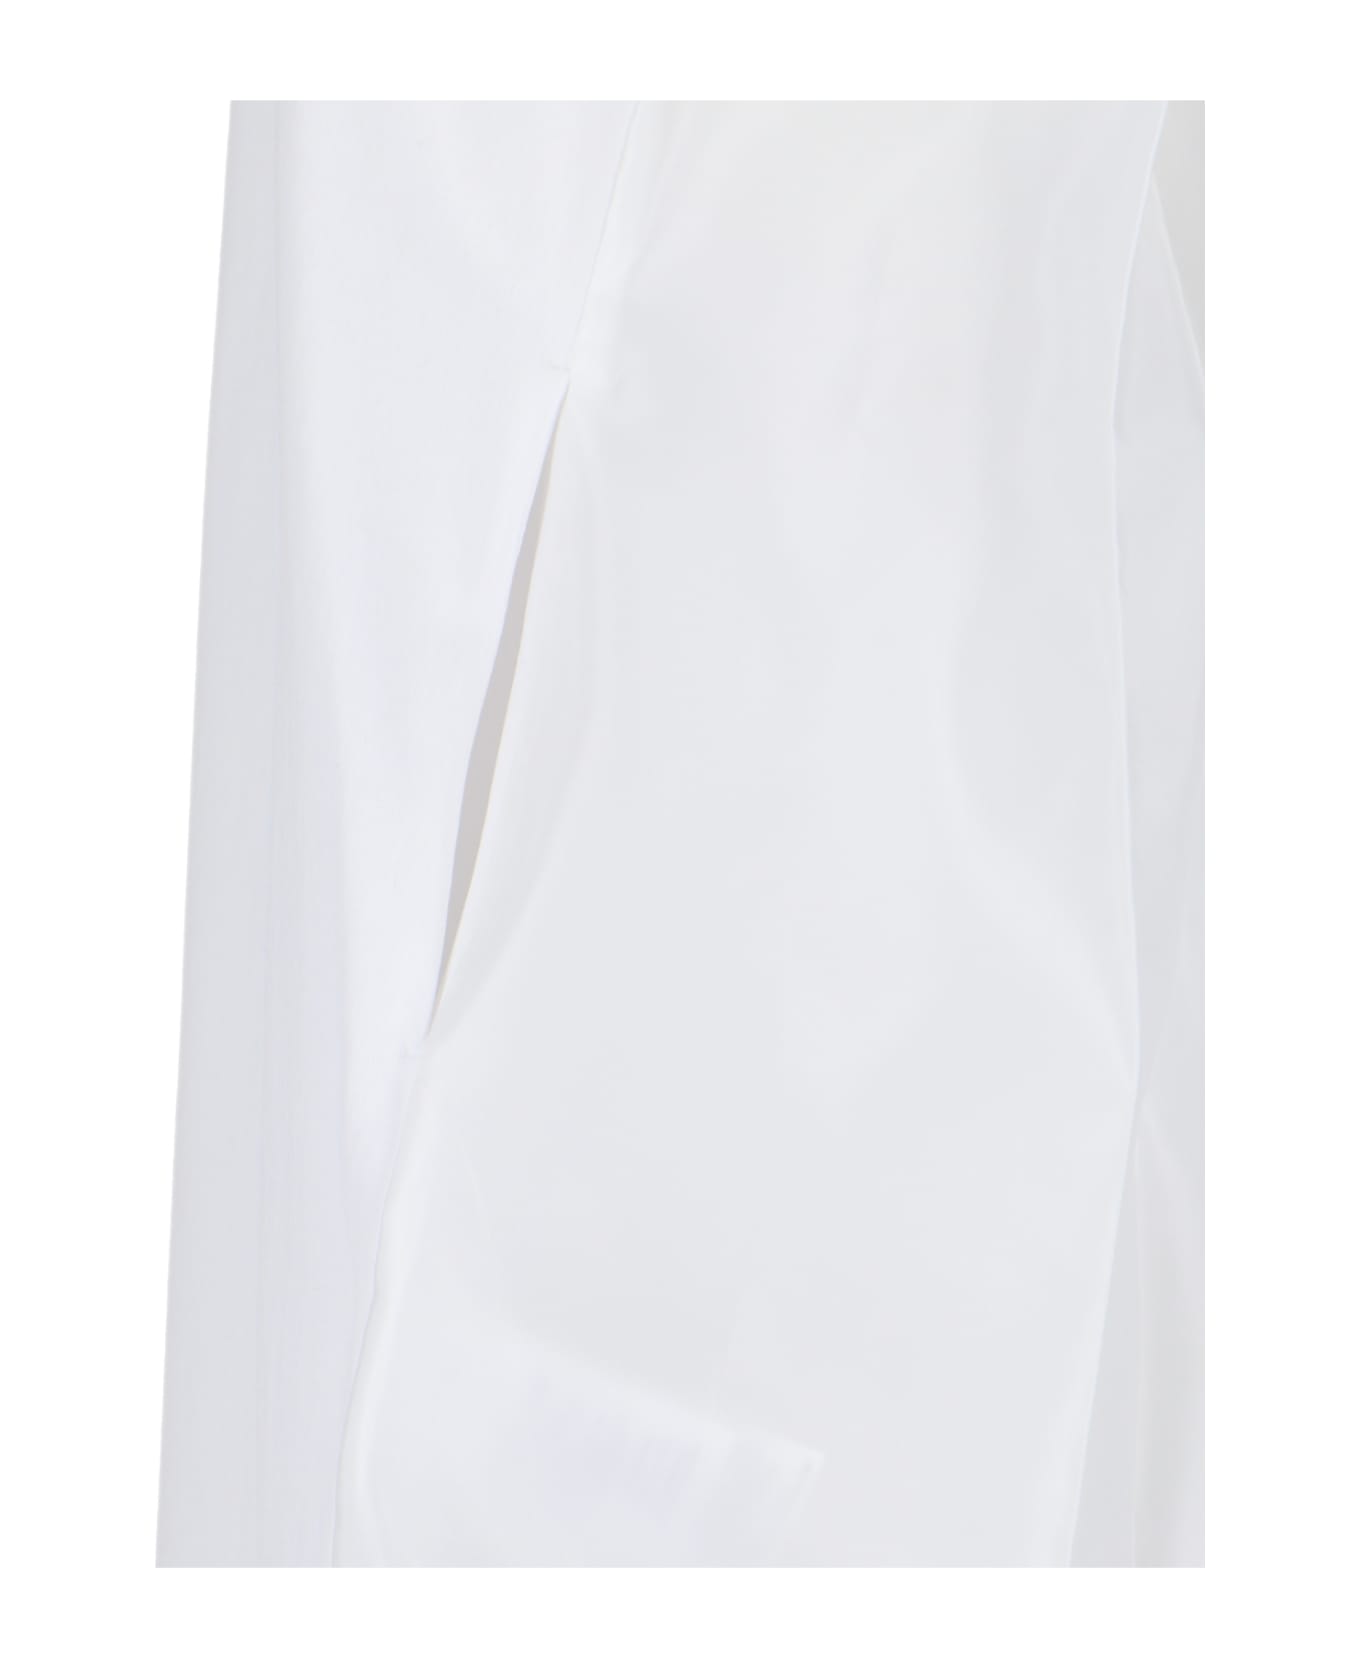 Sacai Sleeveless Mini Dress - White